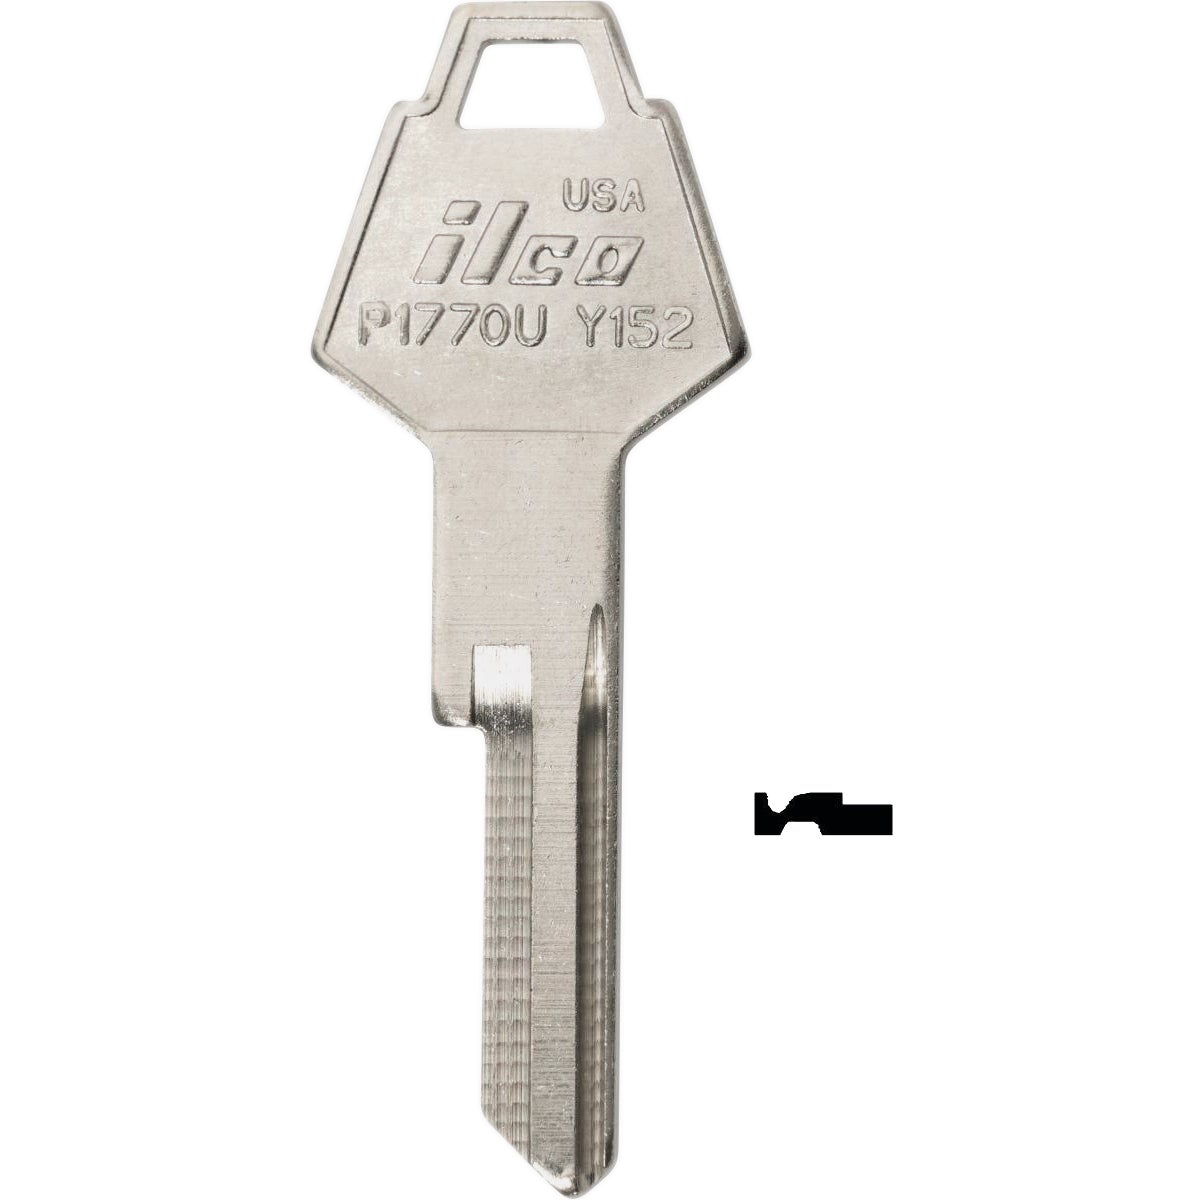 ILCO Chrysler Automotive Key Y152 / P1770U (10-Pack)